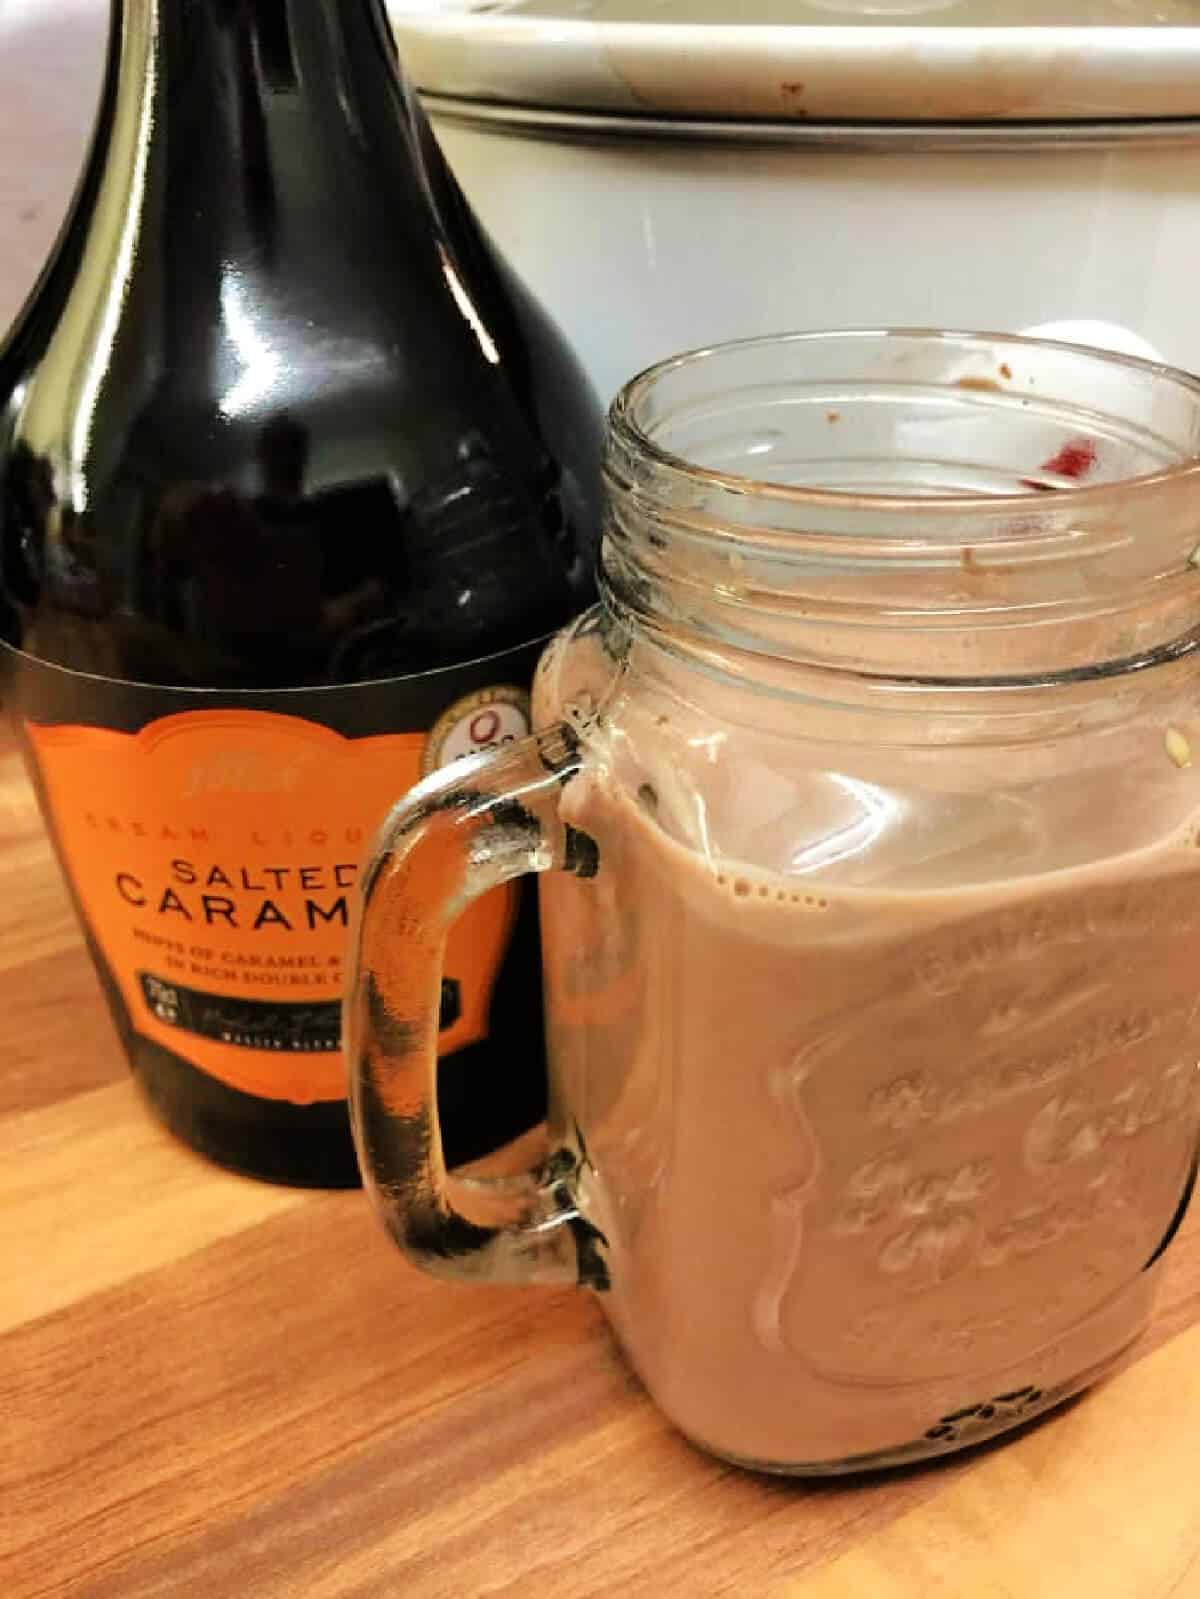 Glass mug of hot chocolate next to bottle of caramel liqueur.